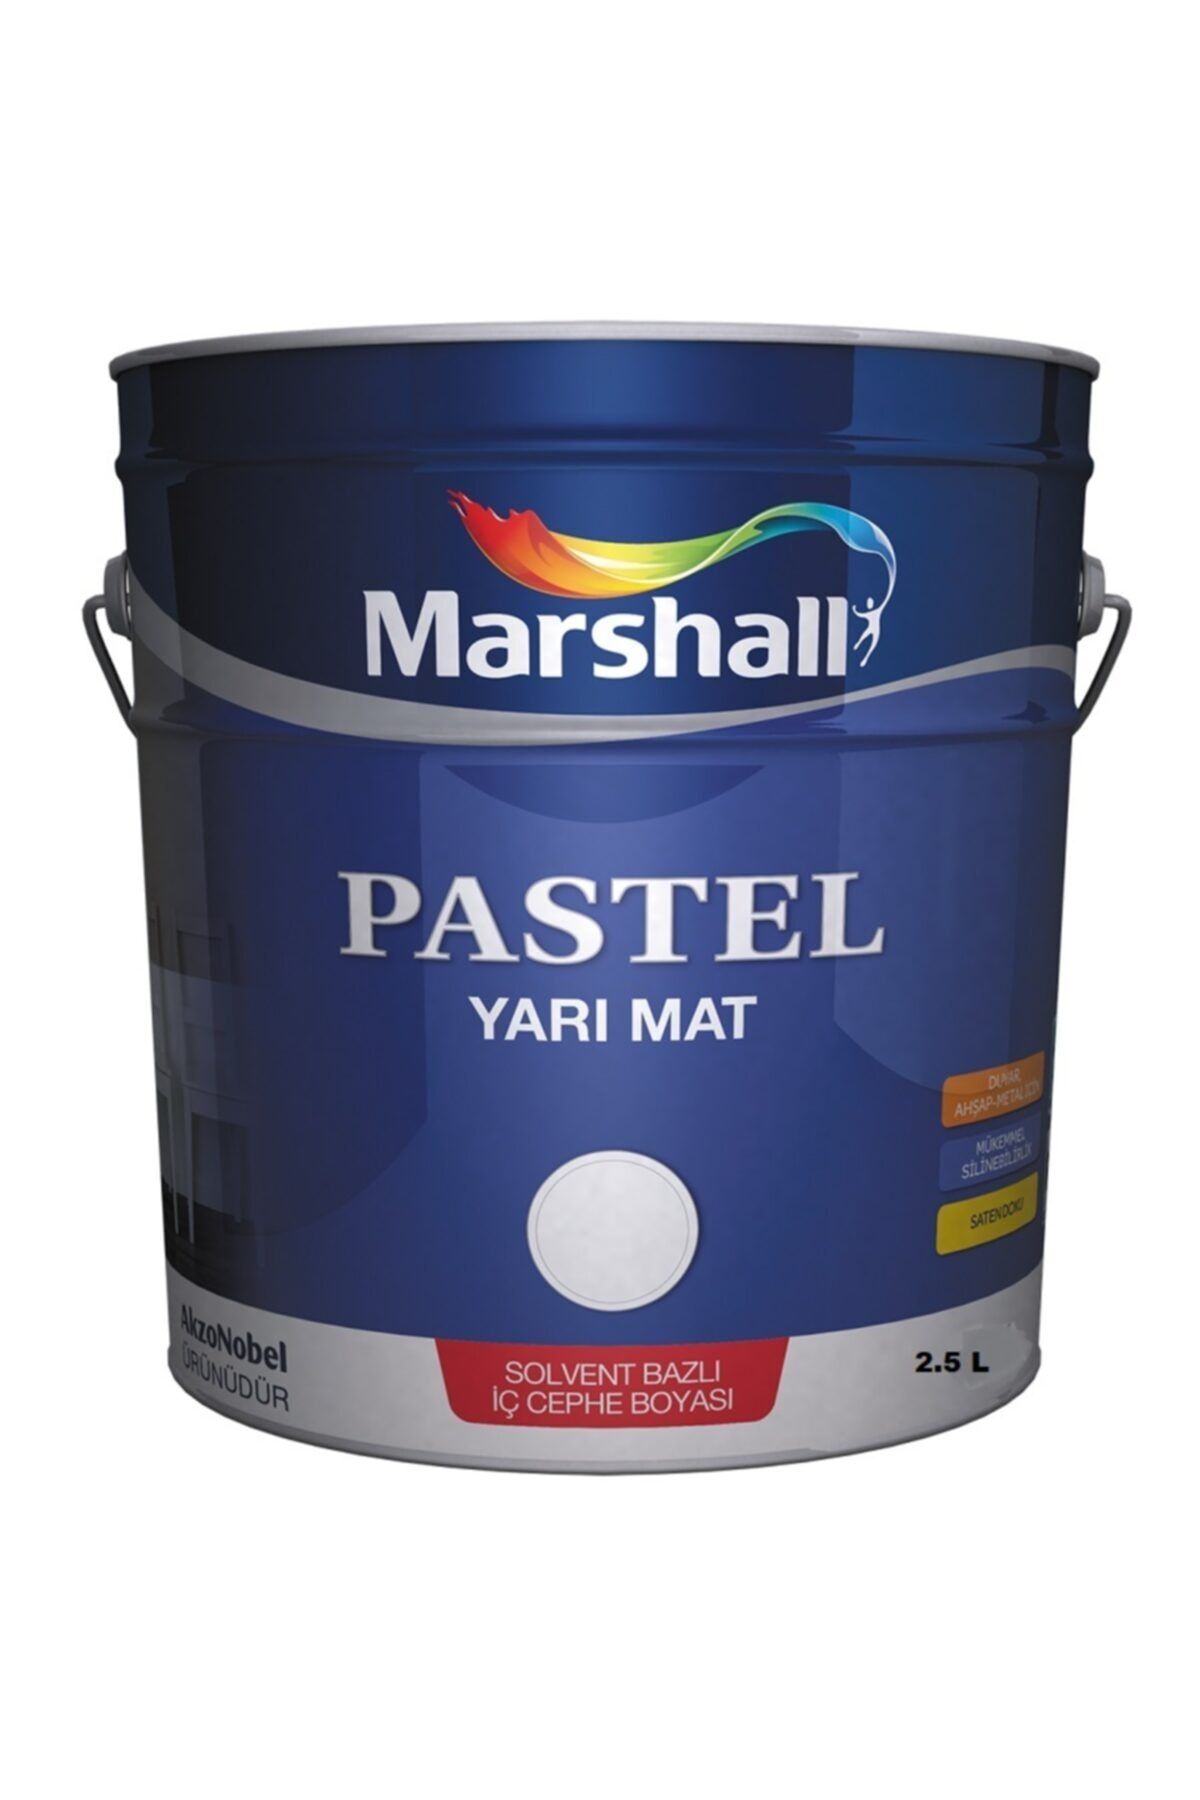 Marshall Pastel Yarı Mat Sentetik Boya 2,5 Lt /3,5 Kg